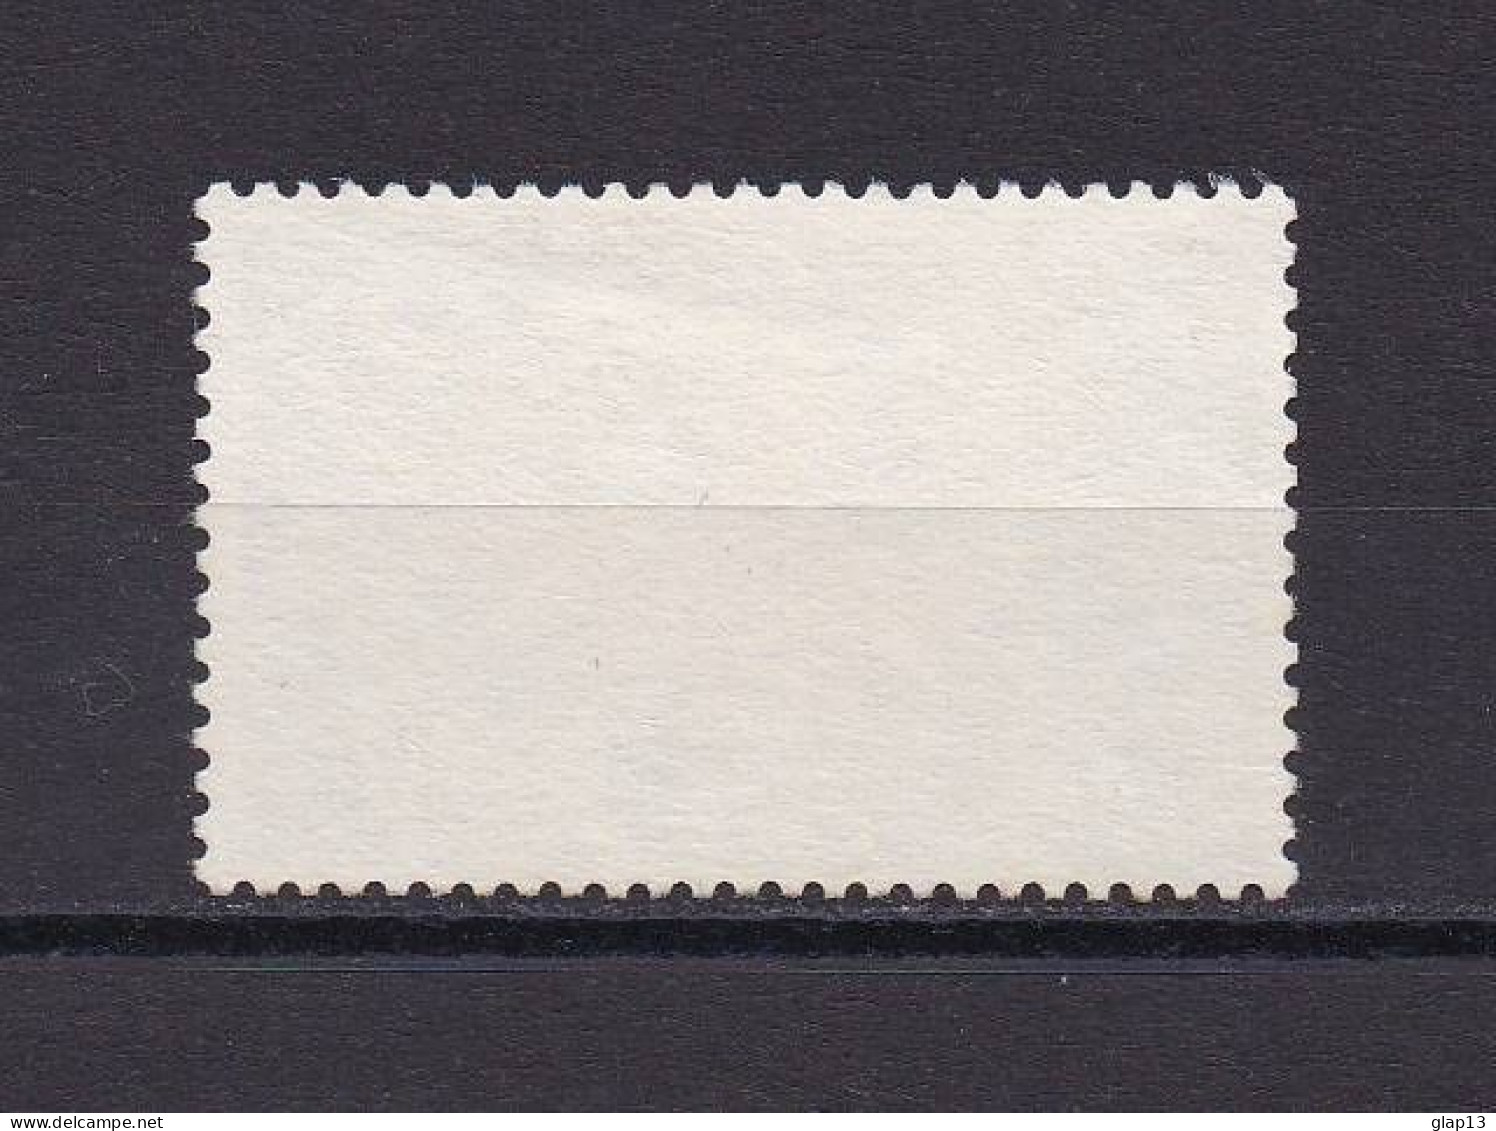 NOUVELLES-HEBRIDES 1965 TIMBRE N°217 NEUF SANS GOMME - Unused Stamps